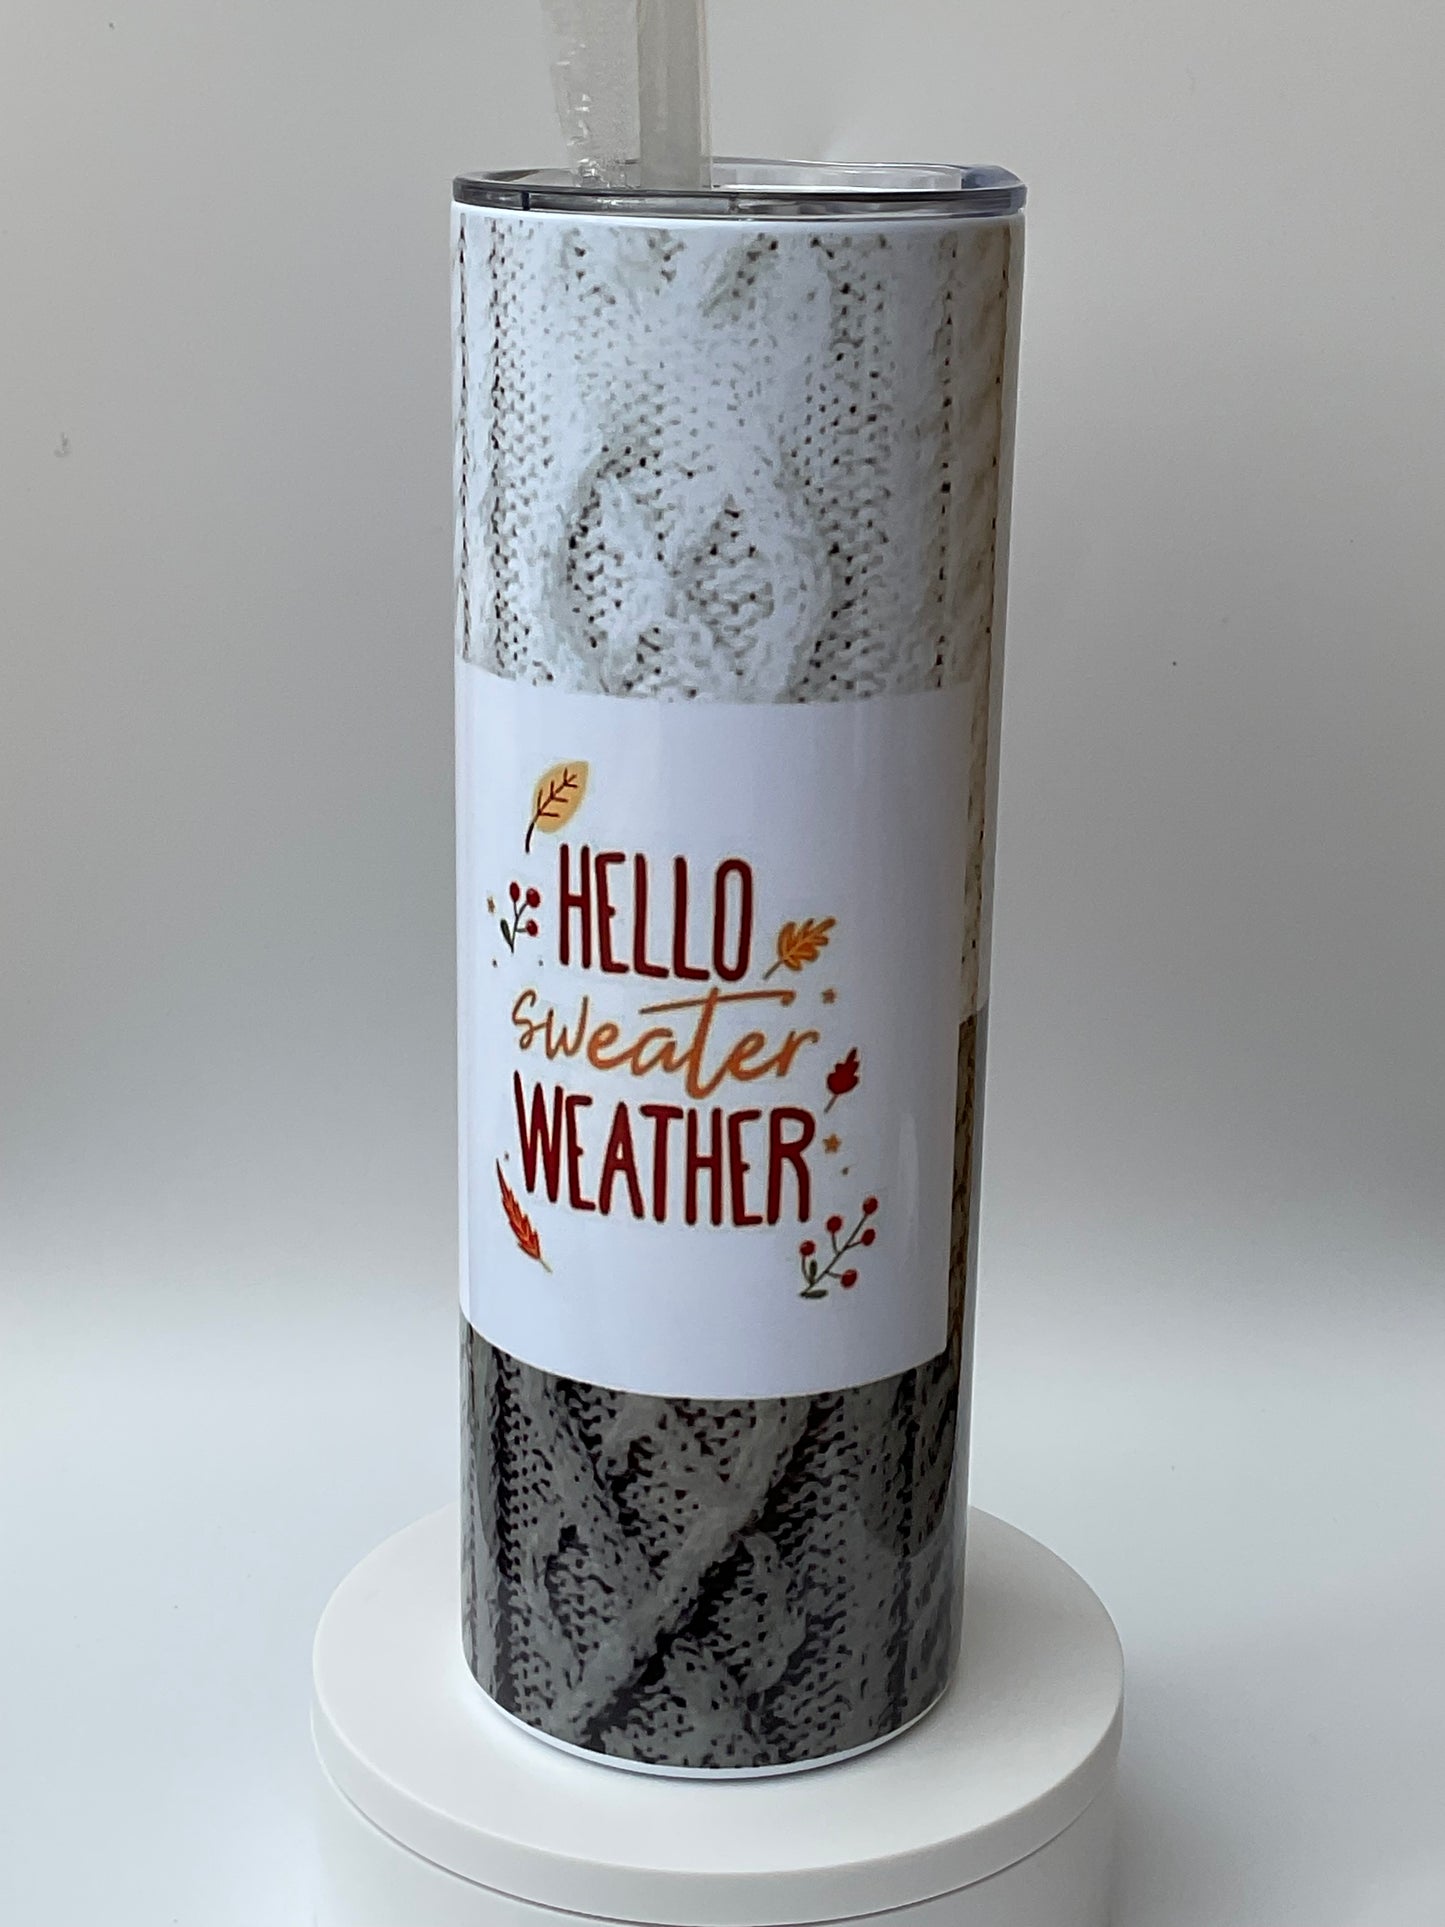 20oz-Hello sweater weather tumbler